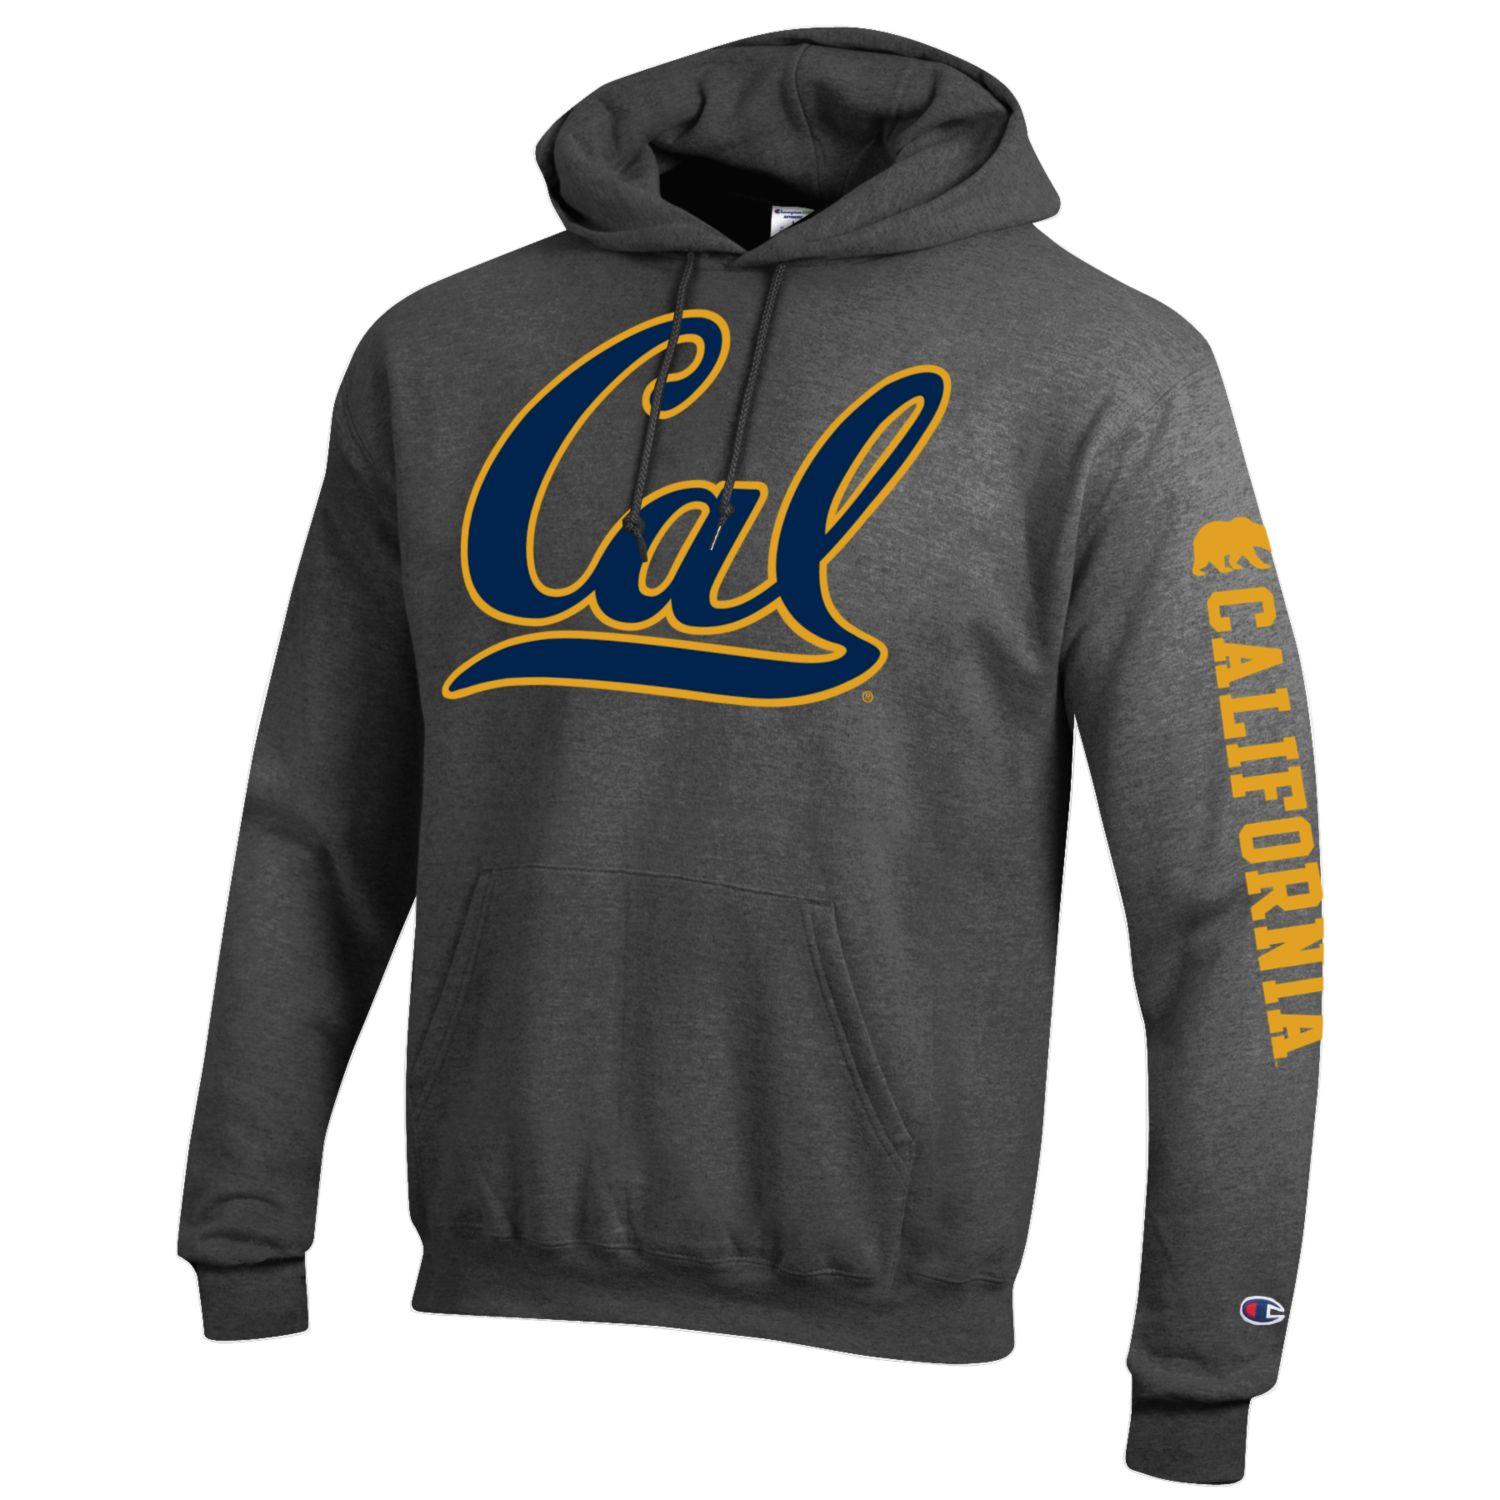 U.C. Berkeley bold Cal hoodie sweatshirt-Charcoal-Shop College Wear